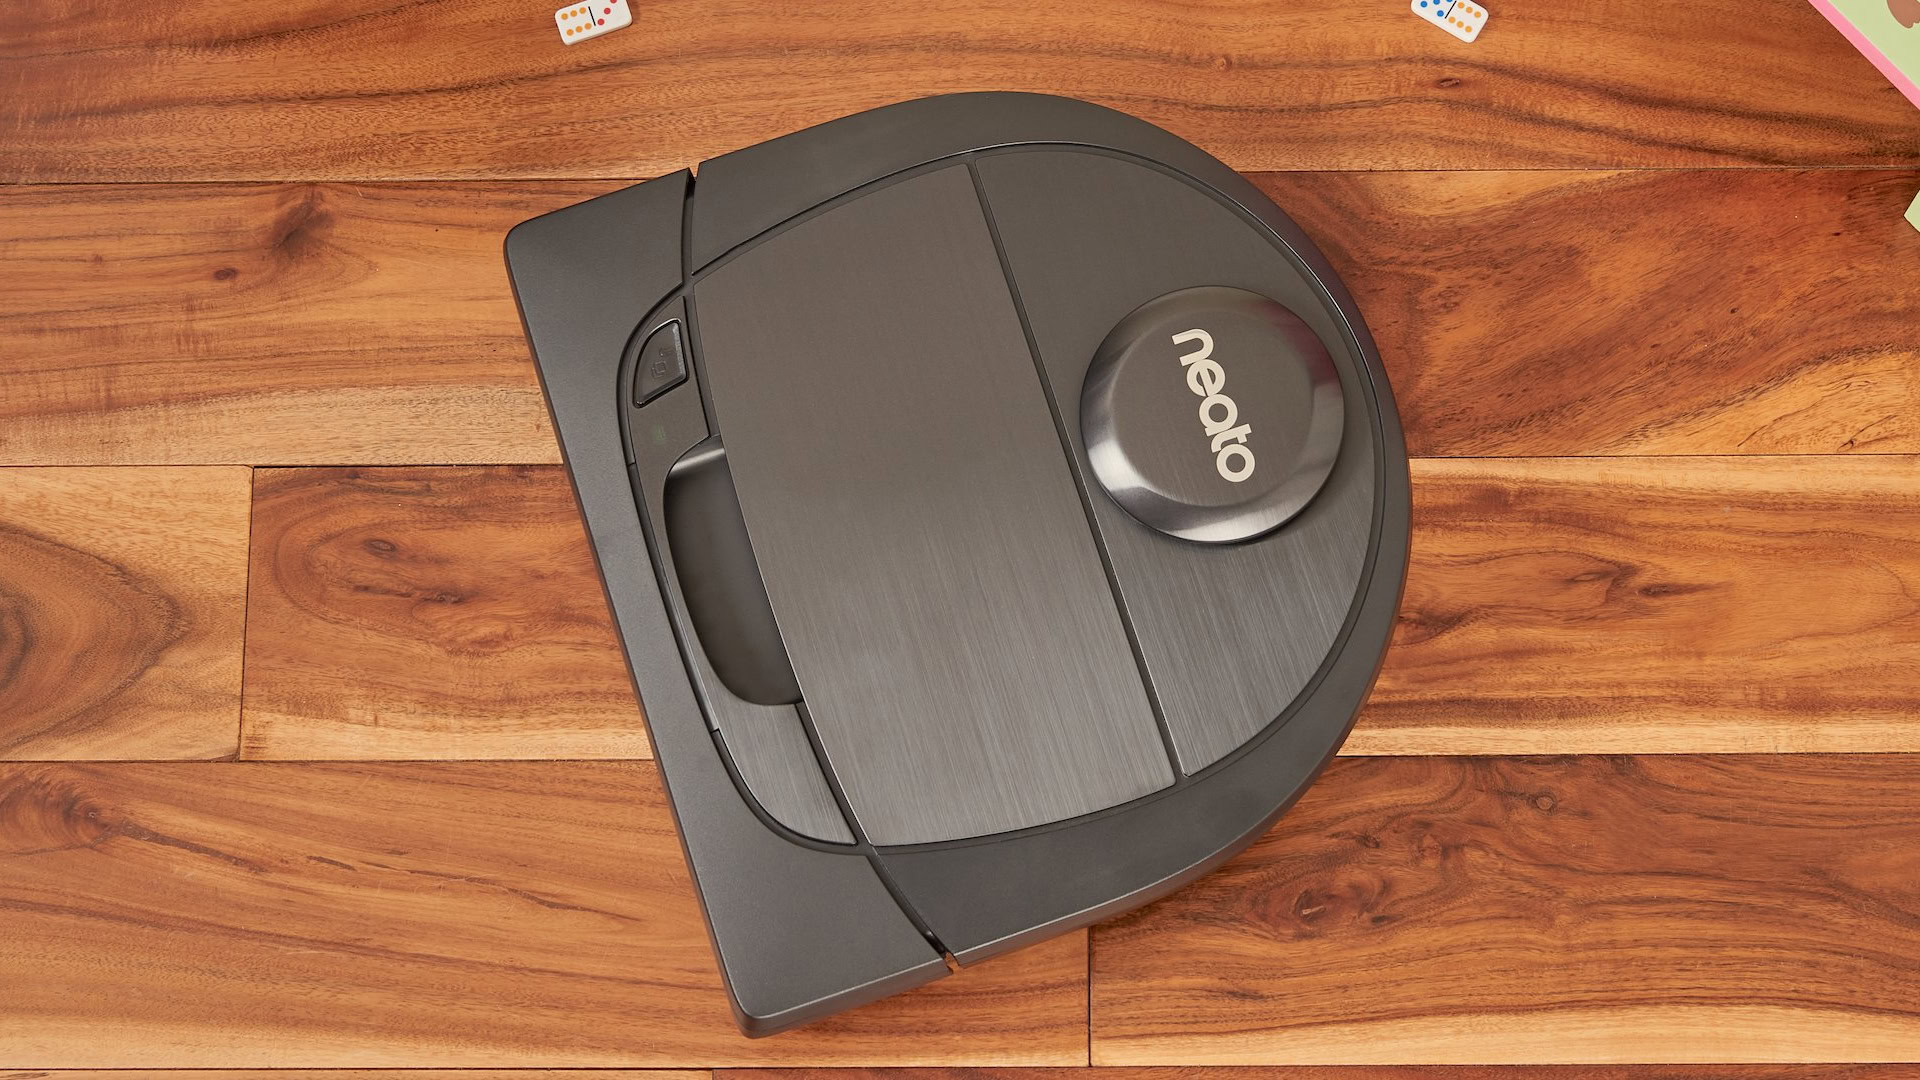 Neato's Botvac D6 vacuum on hardwood. Smart home Black Friday deals.